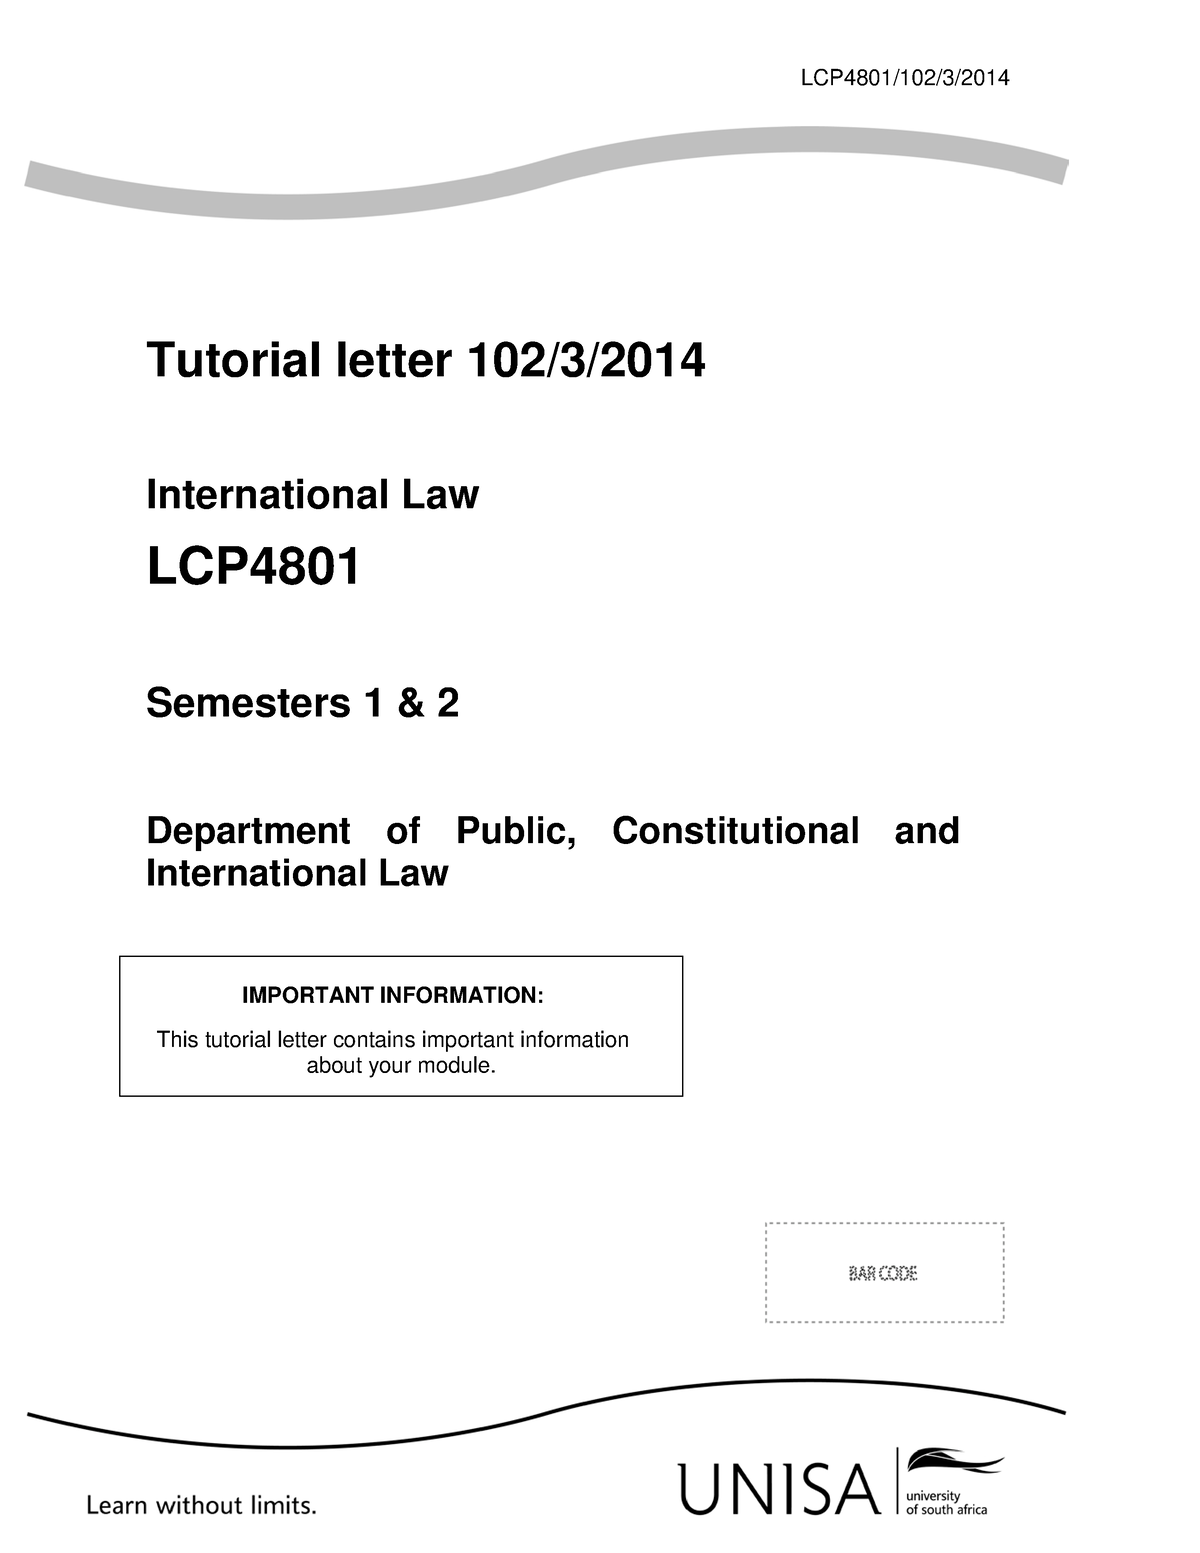 thesis topics international law